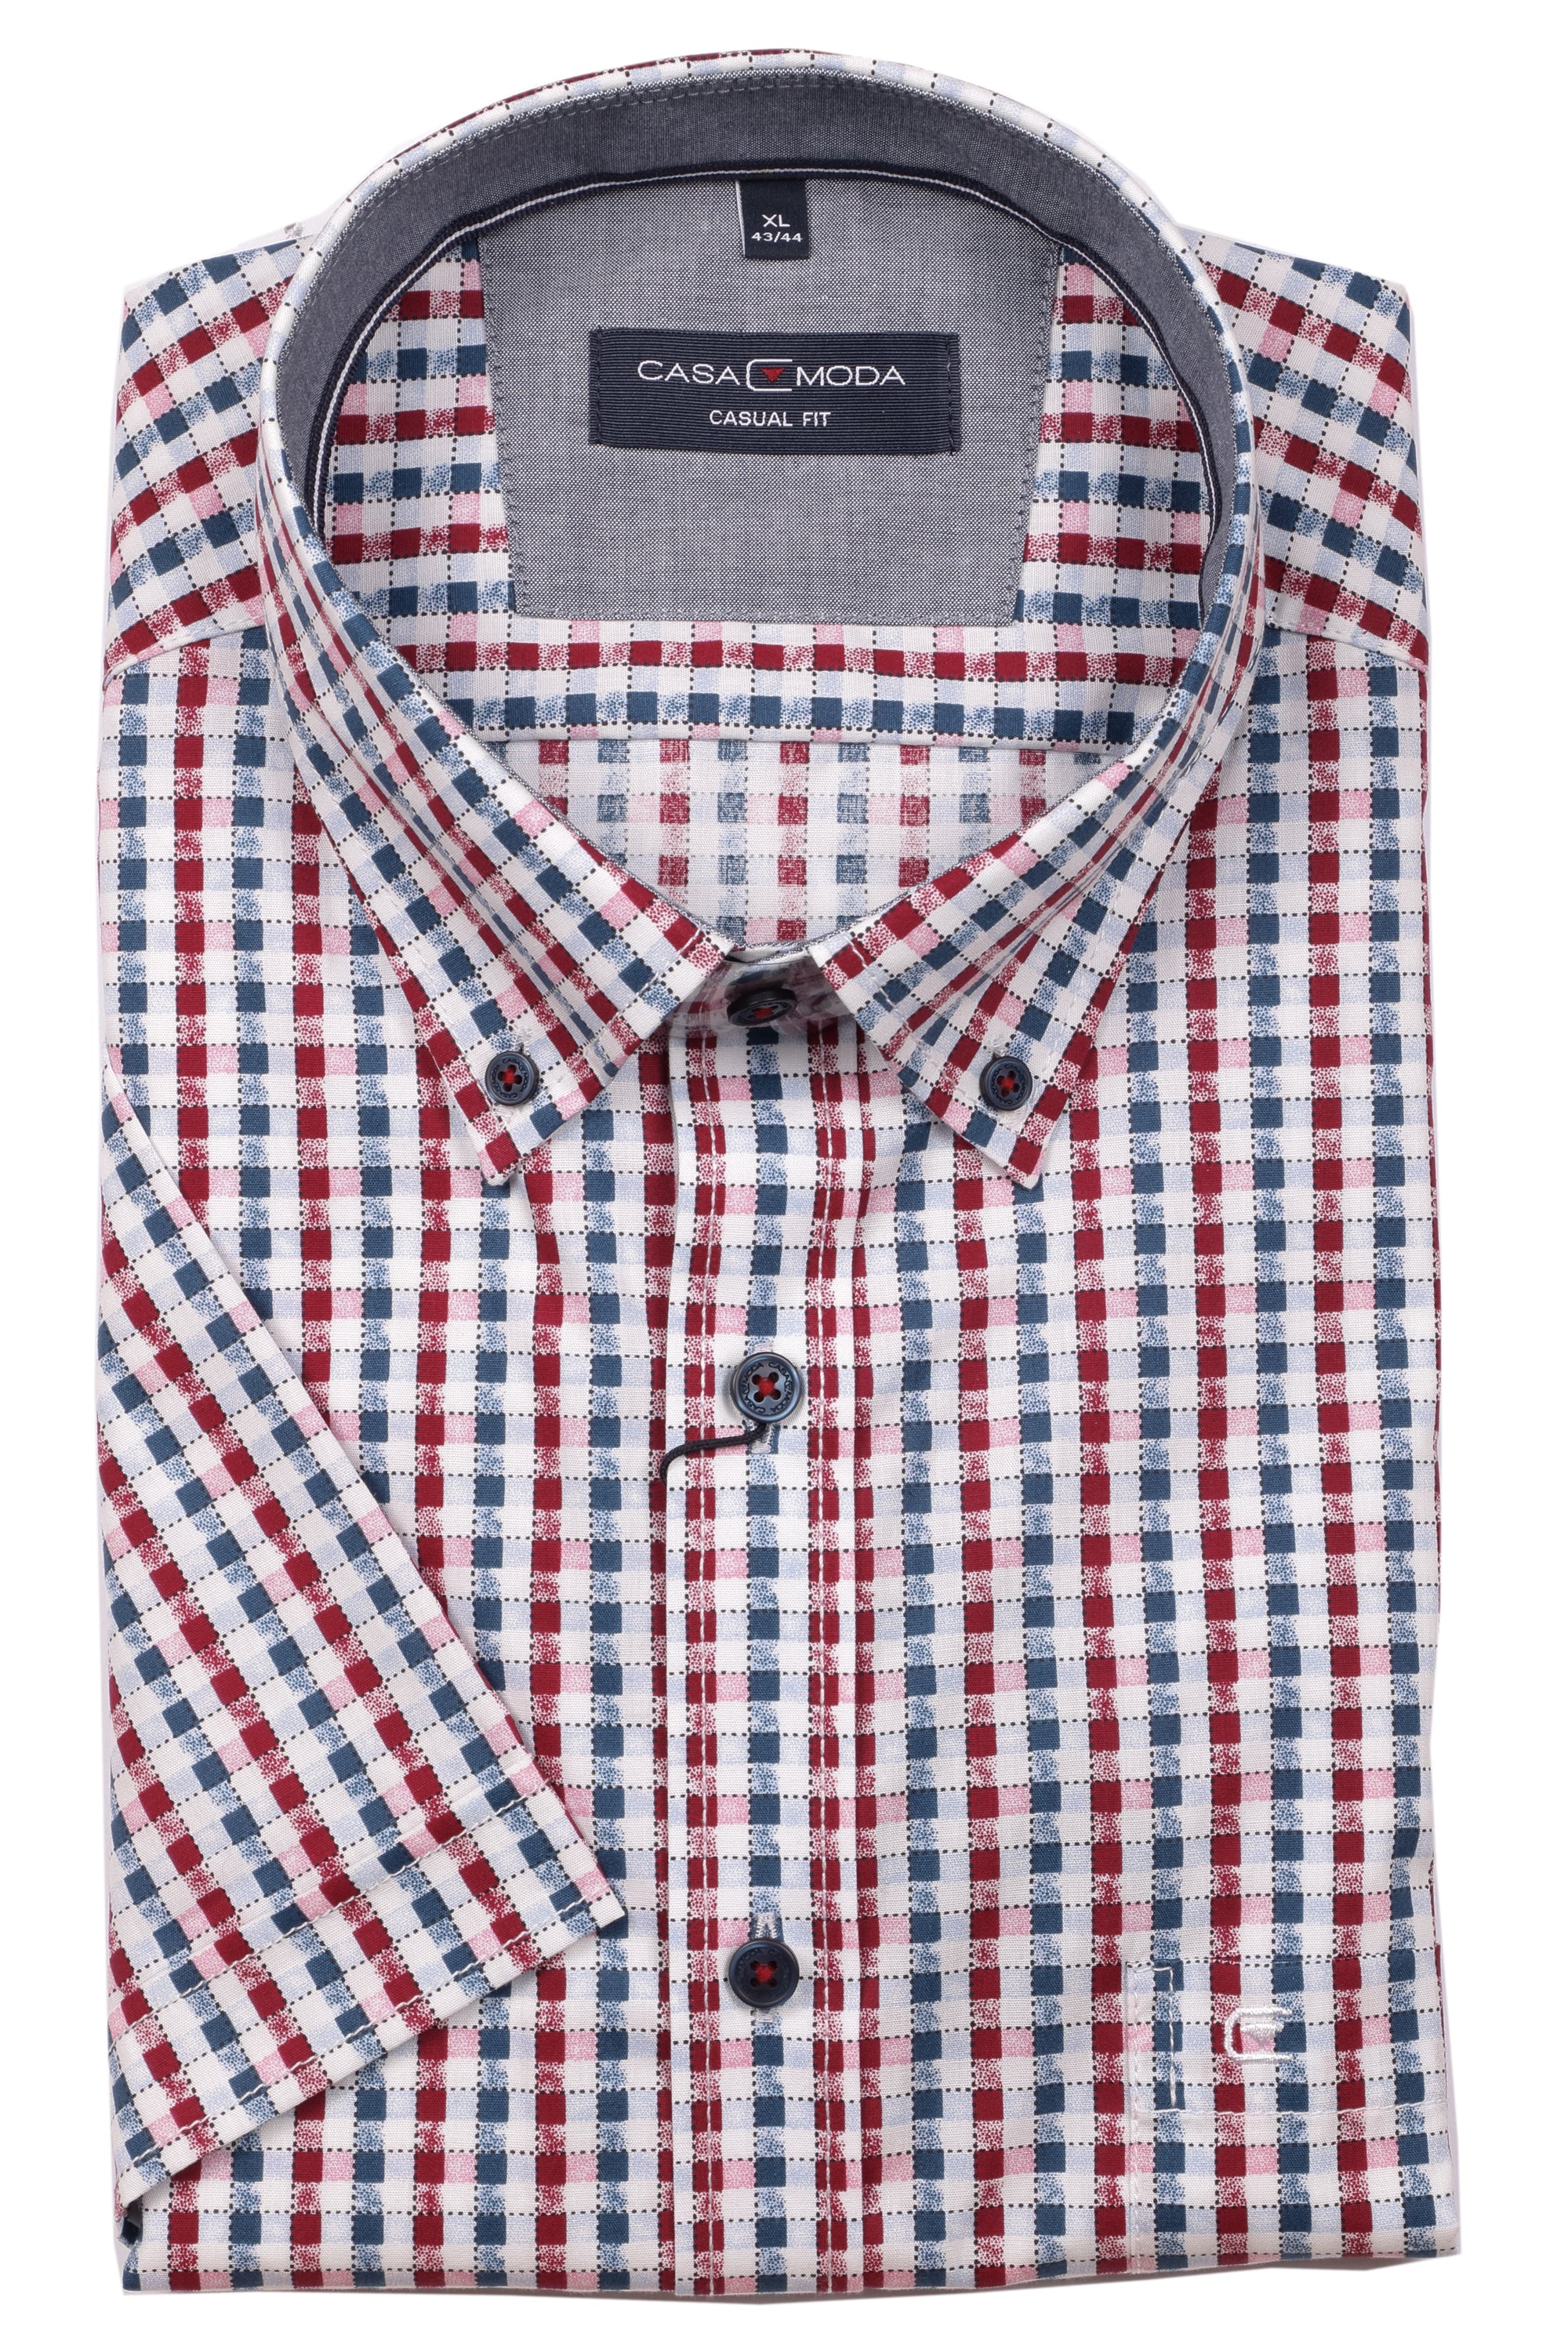 metrisk Atticus Adskille Casa Moda - Short Sleeve Cotton Shirt - Modern Casual Fit - 903348000 -  BrownsMenswear.com